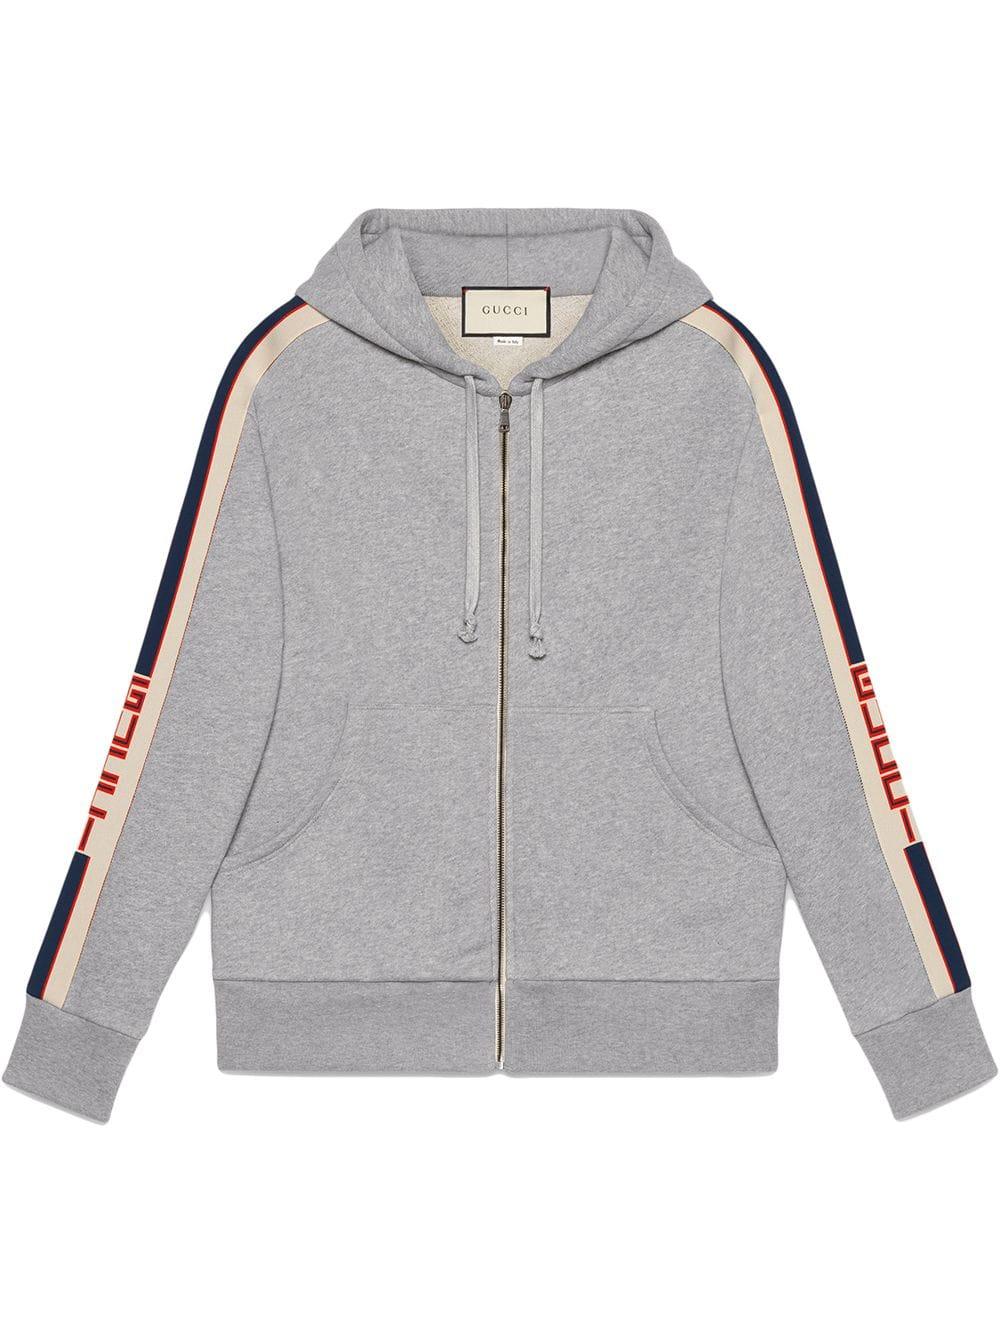 Gucci Hooded Zip-up Sweatshirt With Stripe in Grey for Men | Lyst UK